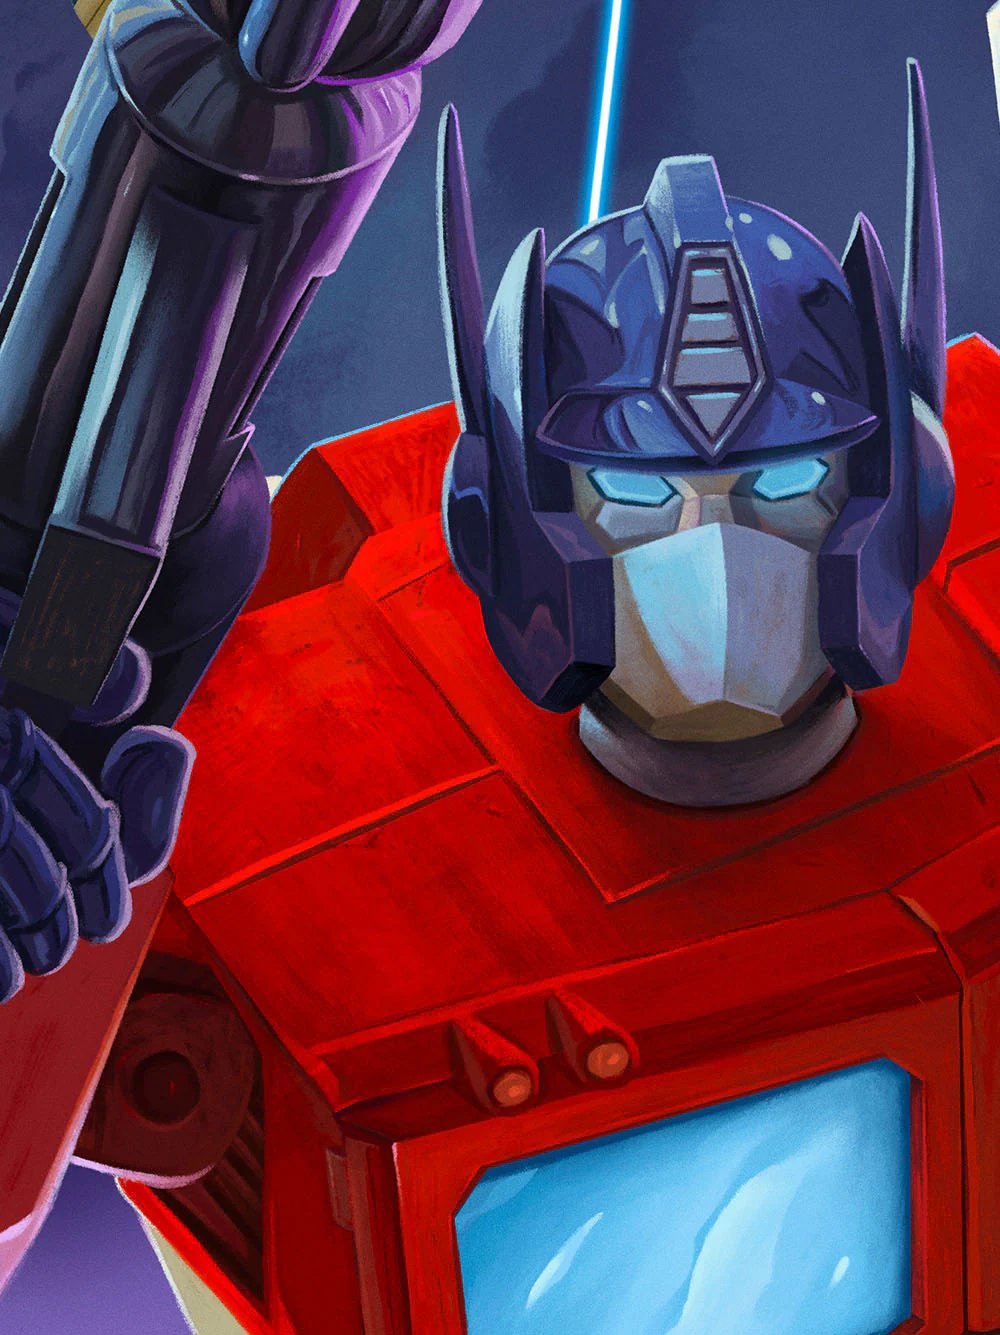 Transformers 'Autobots' Poster - Cartoon Variant - 18" x 24"